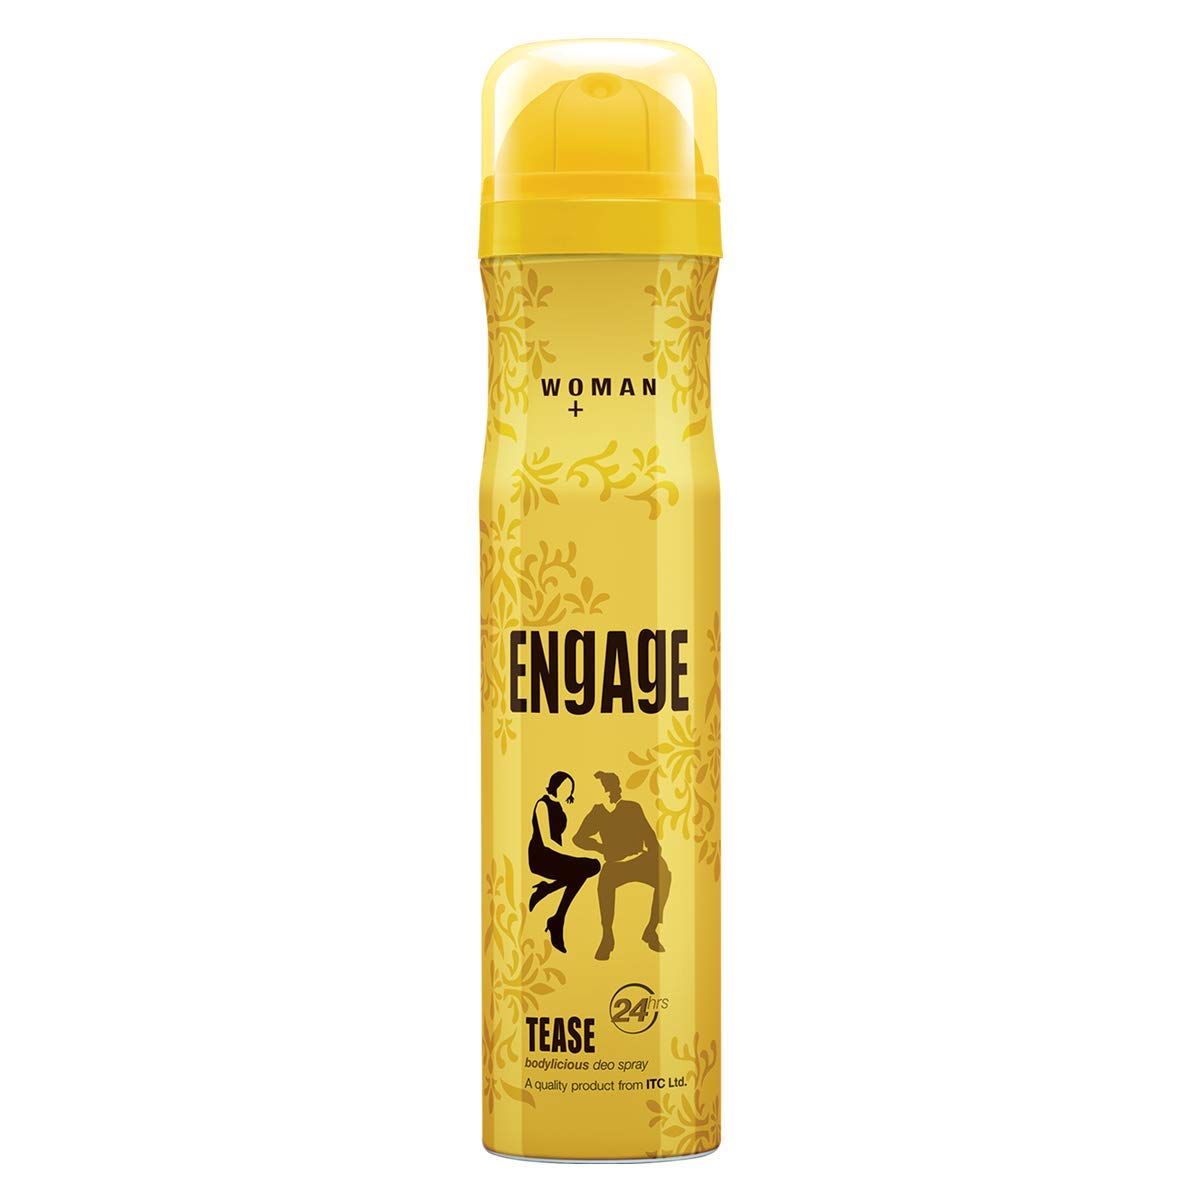 Engage Woman Deodorant - Tease (150ml) - Niram